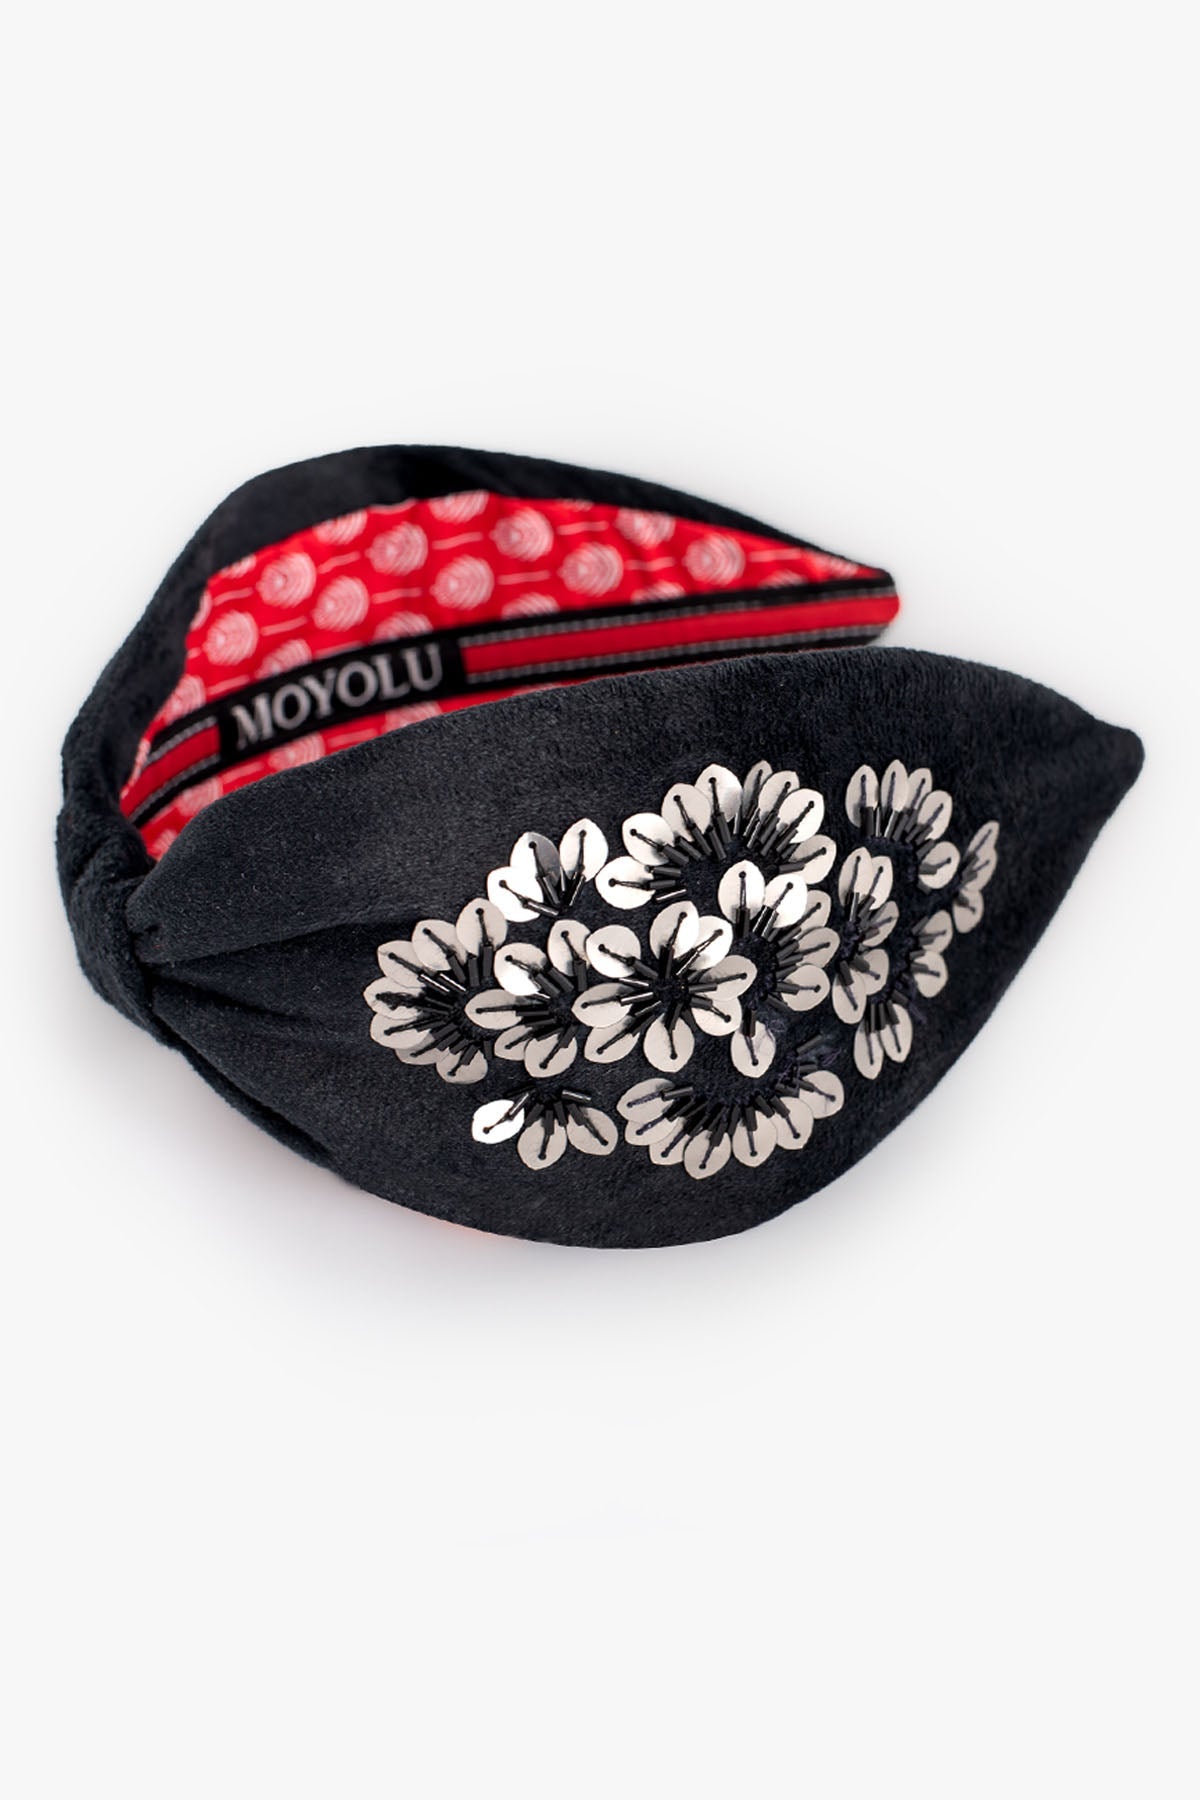 Moyolu Black Velvet Sequins Headband Accessories online at ScrollnShops